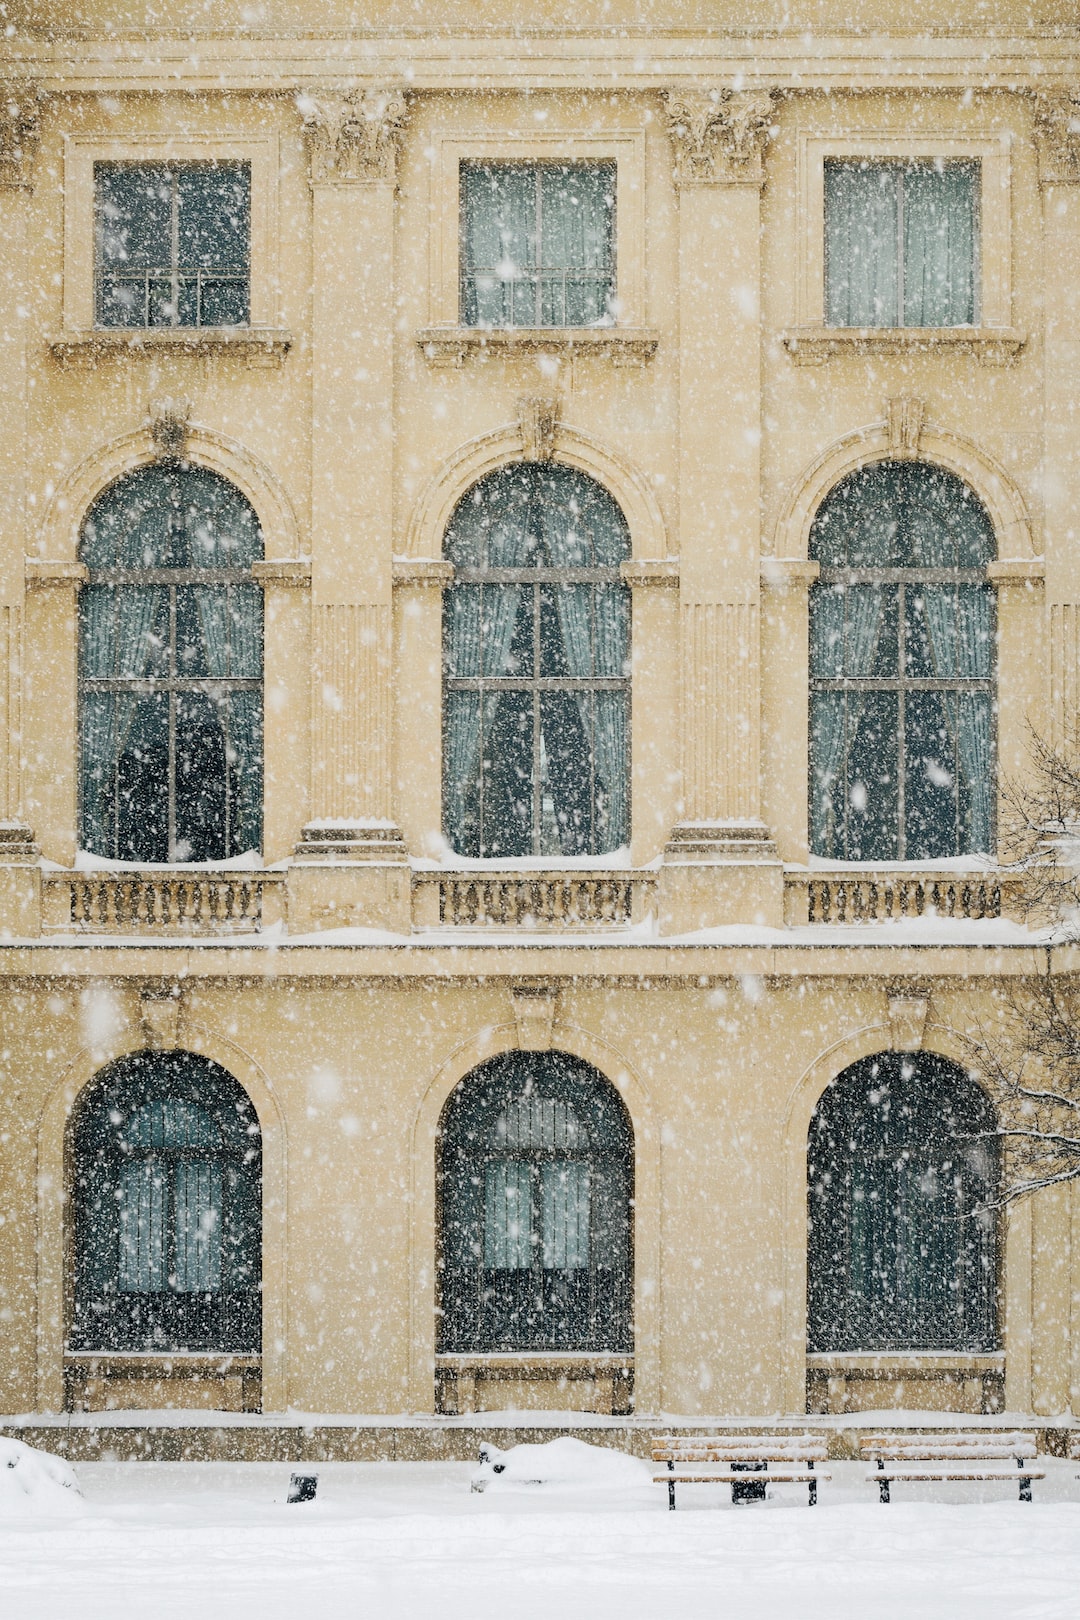 Snowing in Bucharest